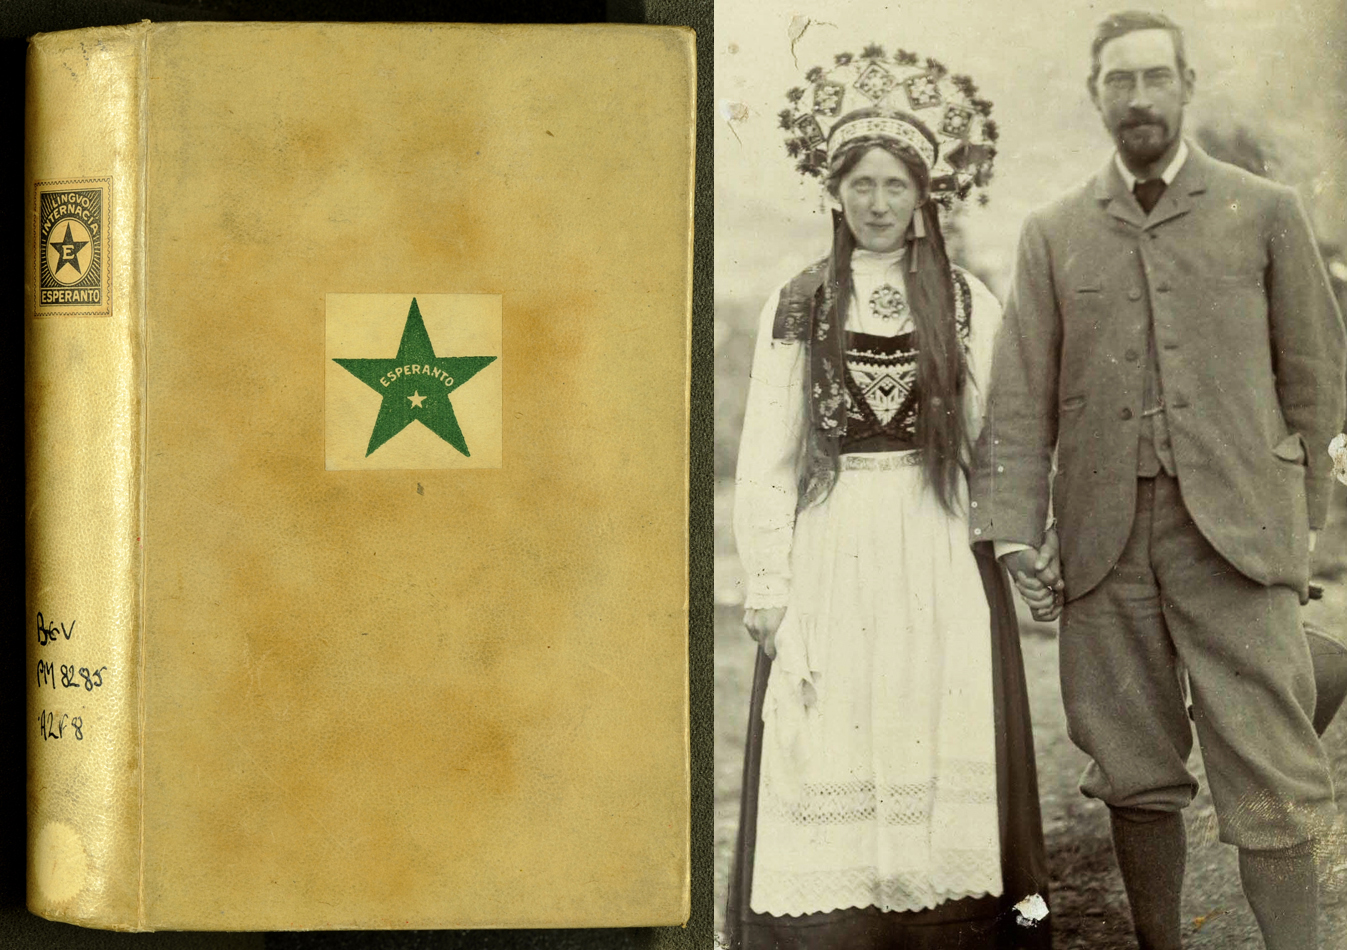 Dr L.L. Zamenhof’s Fundamenta krestomatio de la lingvo Esperanto (1903); and the Rev. John Beveridge with a soon-to-be-married friend in traditional Norwegian costume.